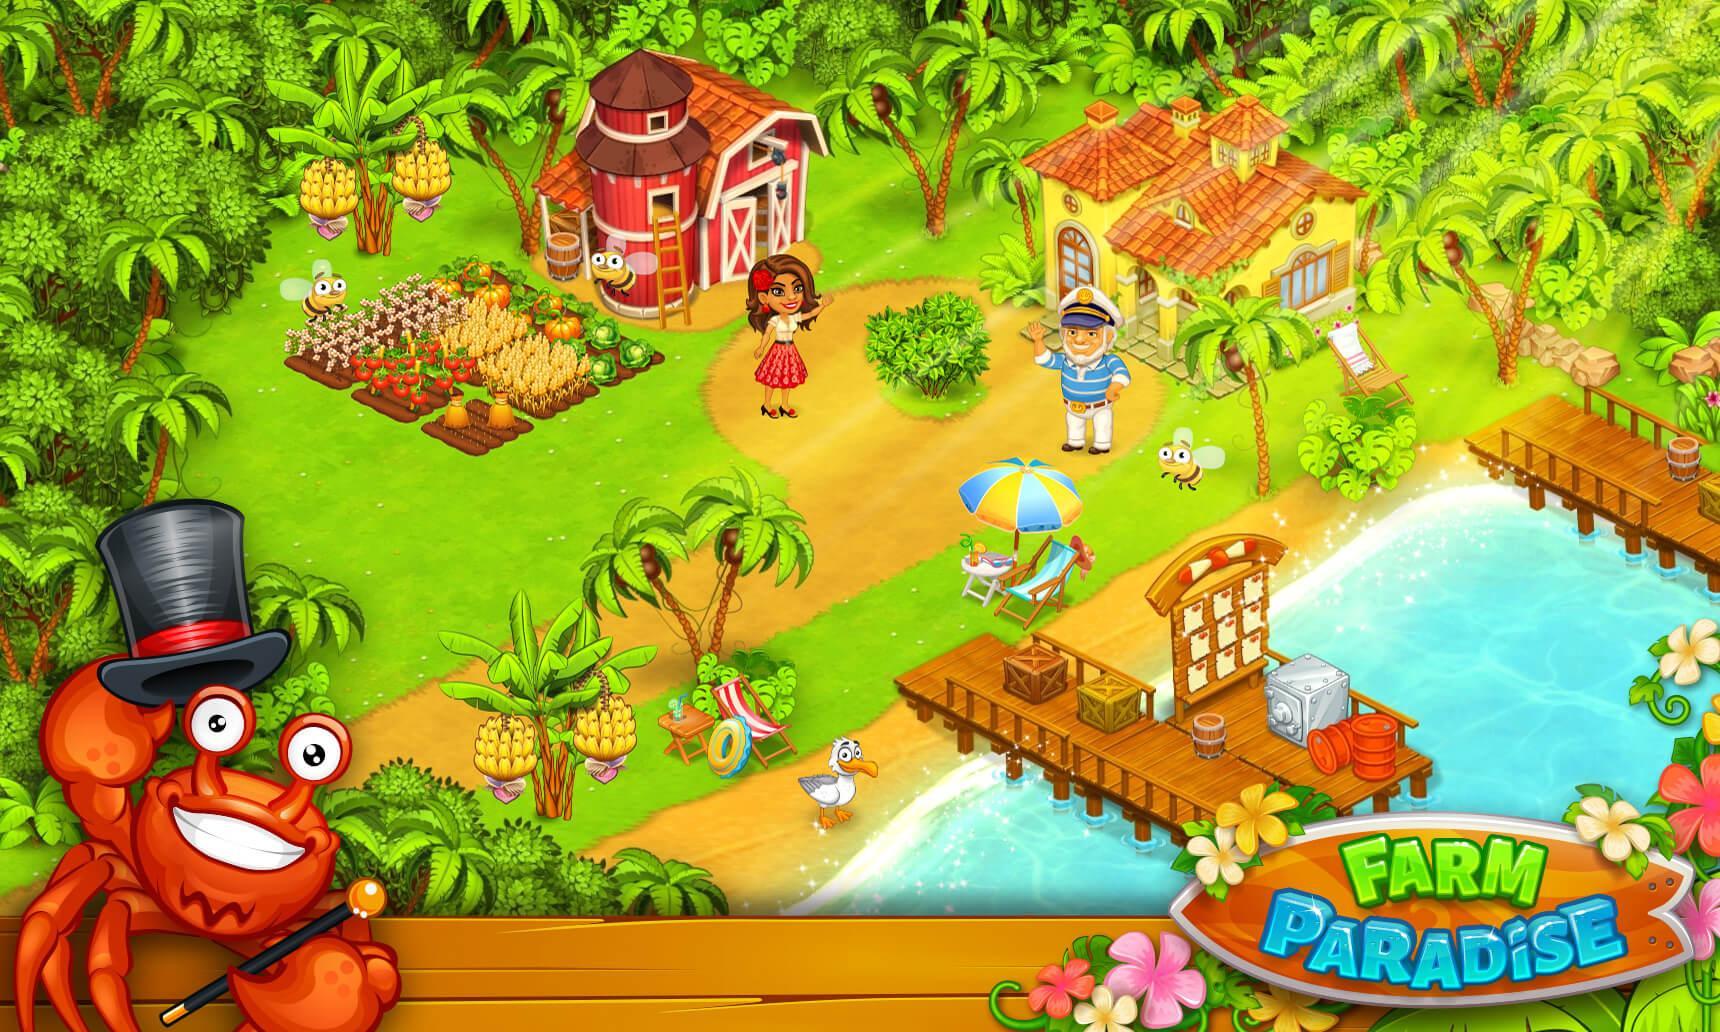 Farm Paradise Fun farm trade game at lost island 2.17 Screenshot 15